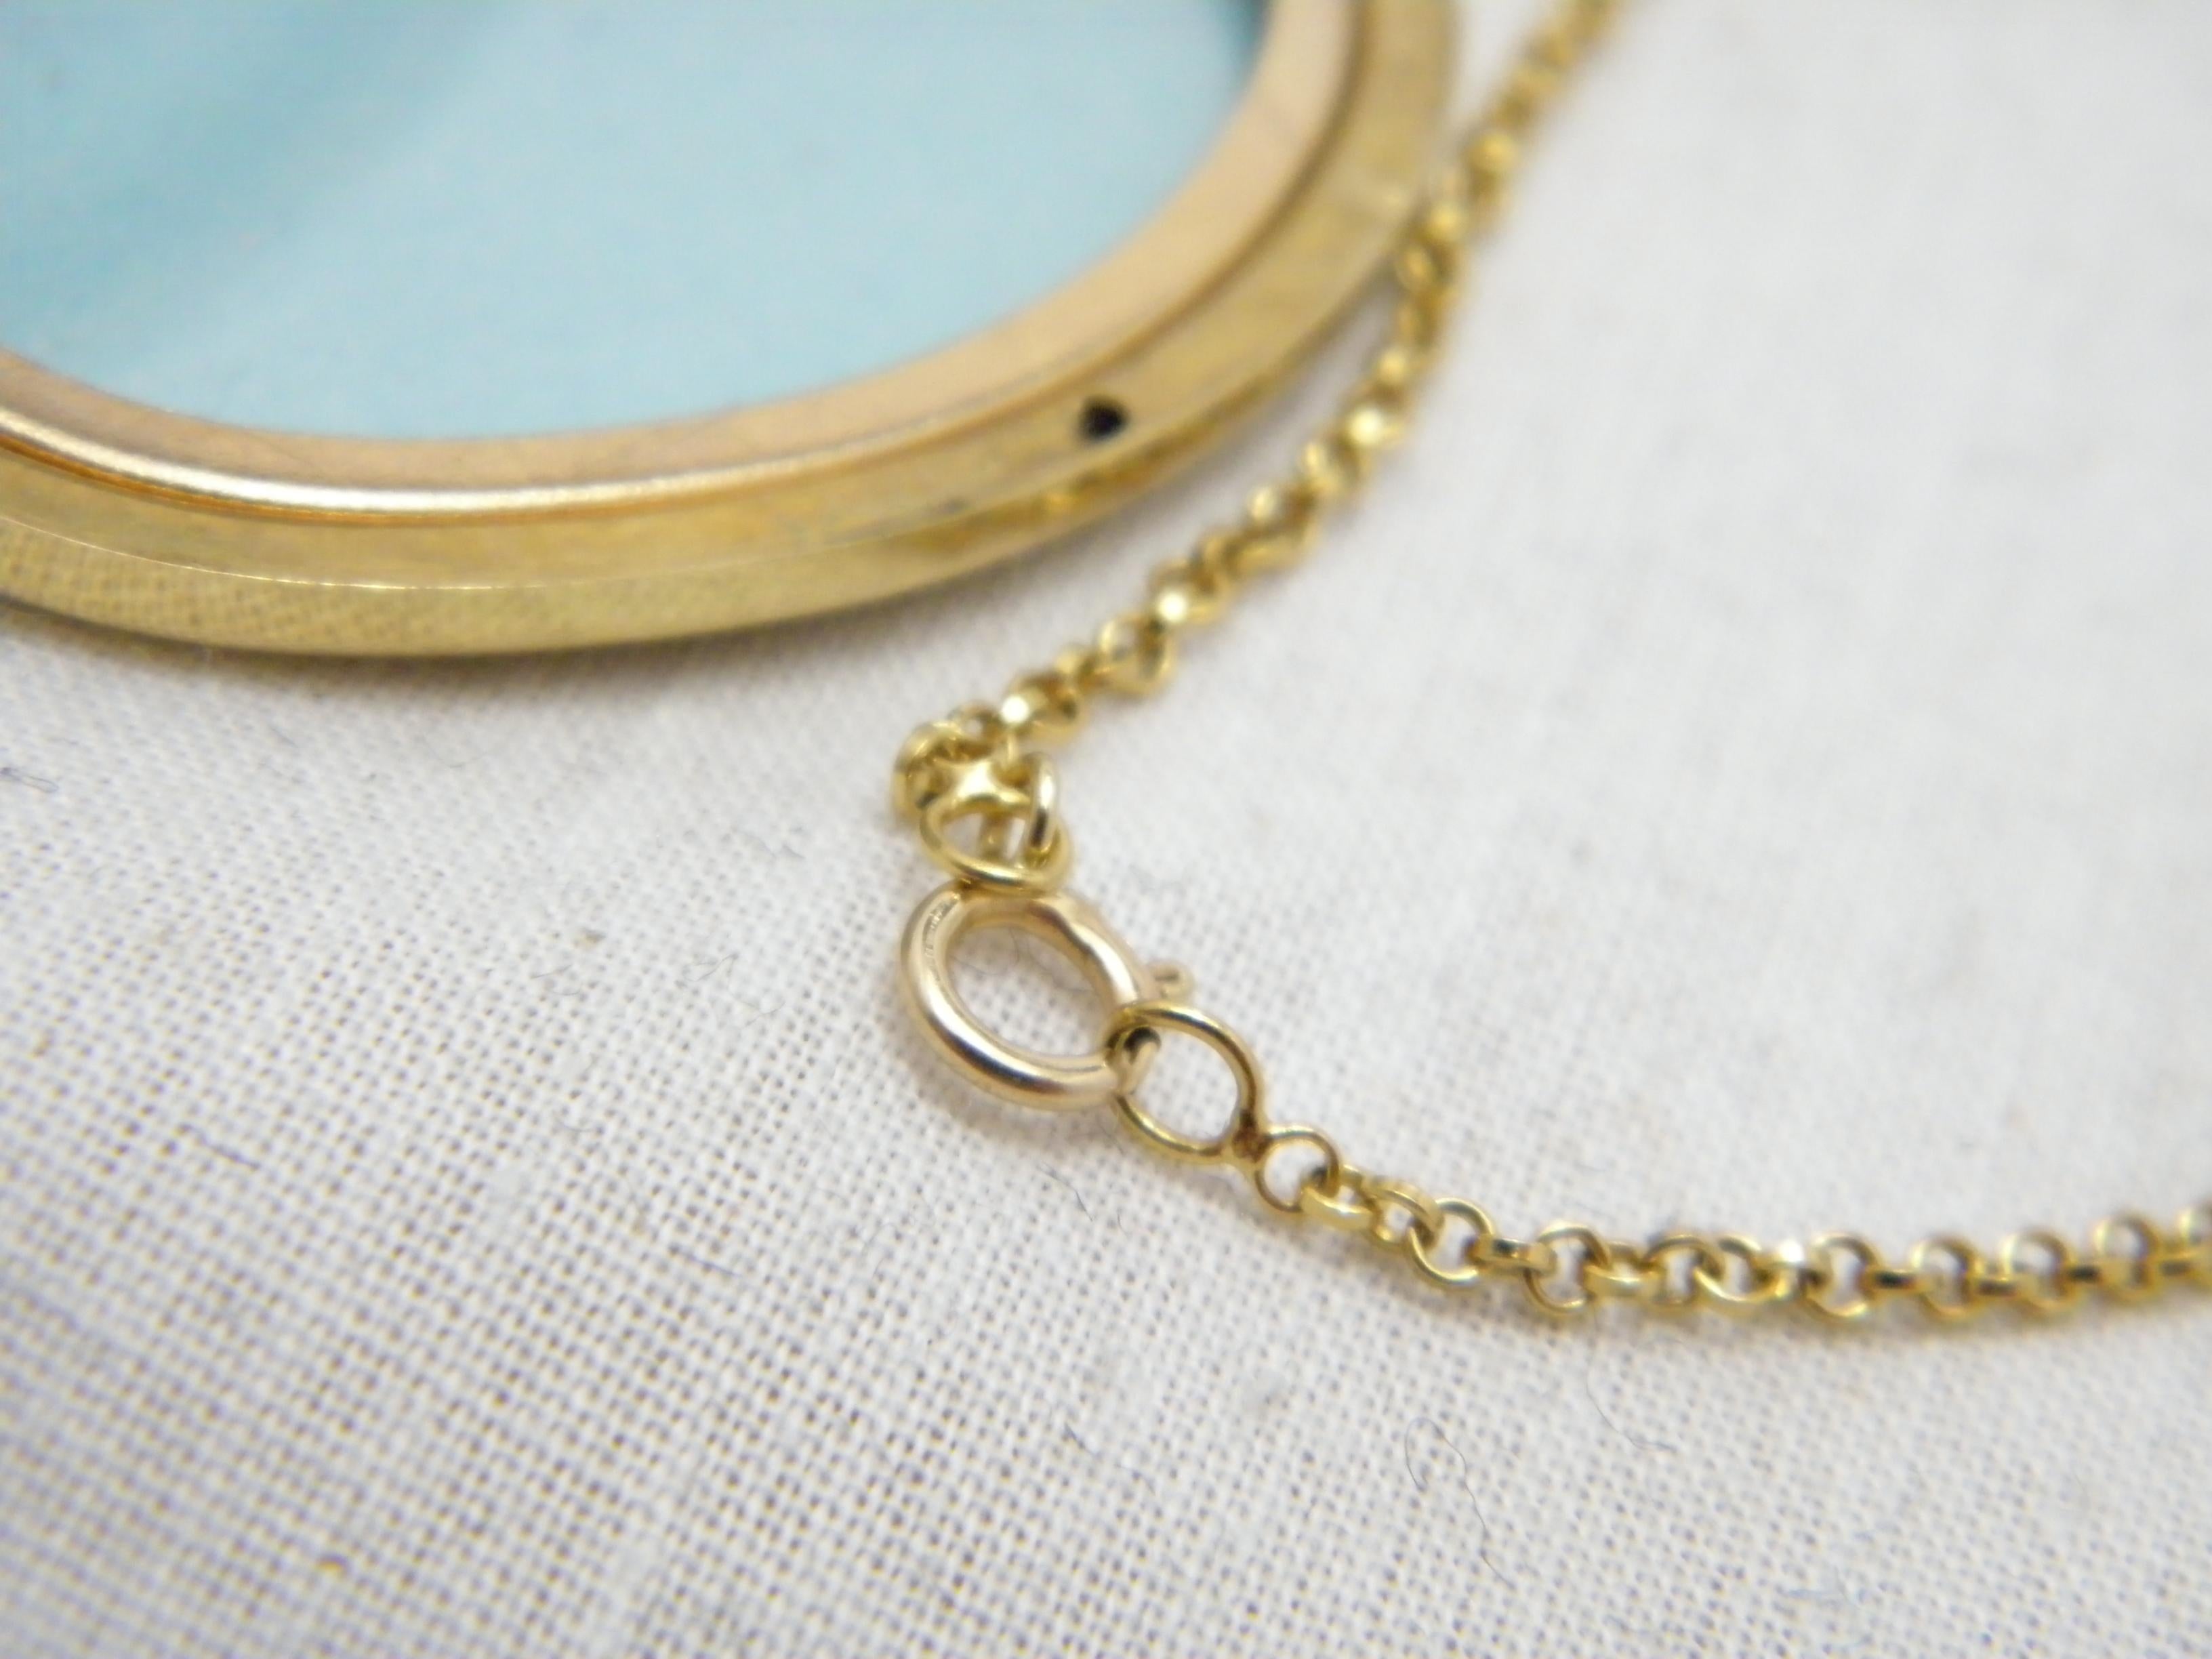 Vintage 9ct Gold Enormous Floral Locket Pendant Necklace Belcher Chain 20 Inch For Sale 4